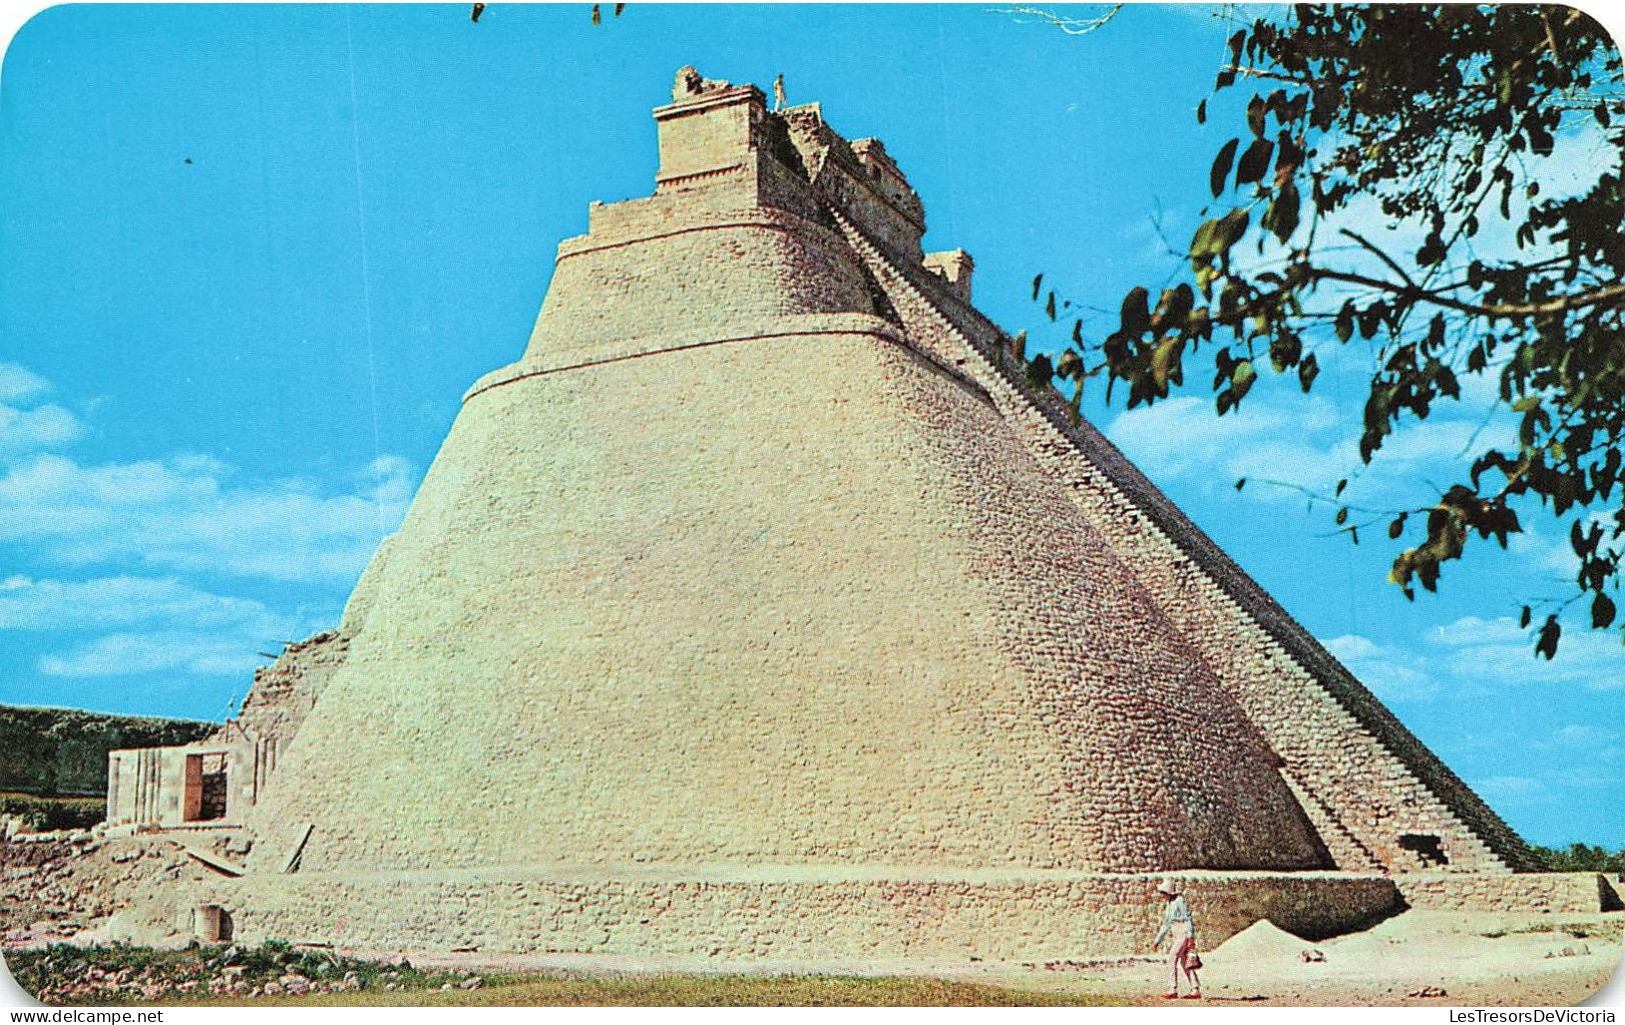 MEXIQUE - Temple Of The Magician - Uxmal - Yucatan - Mexico - Animé - Vue Générale - Carte Postale - Mexico